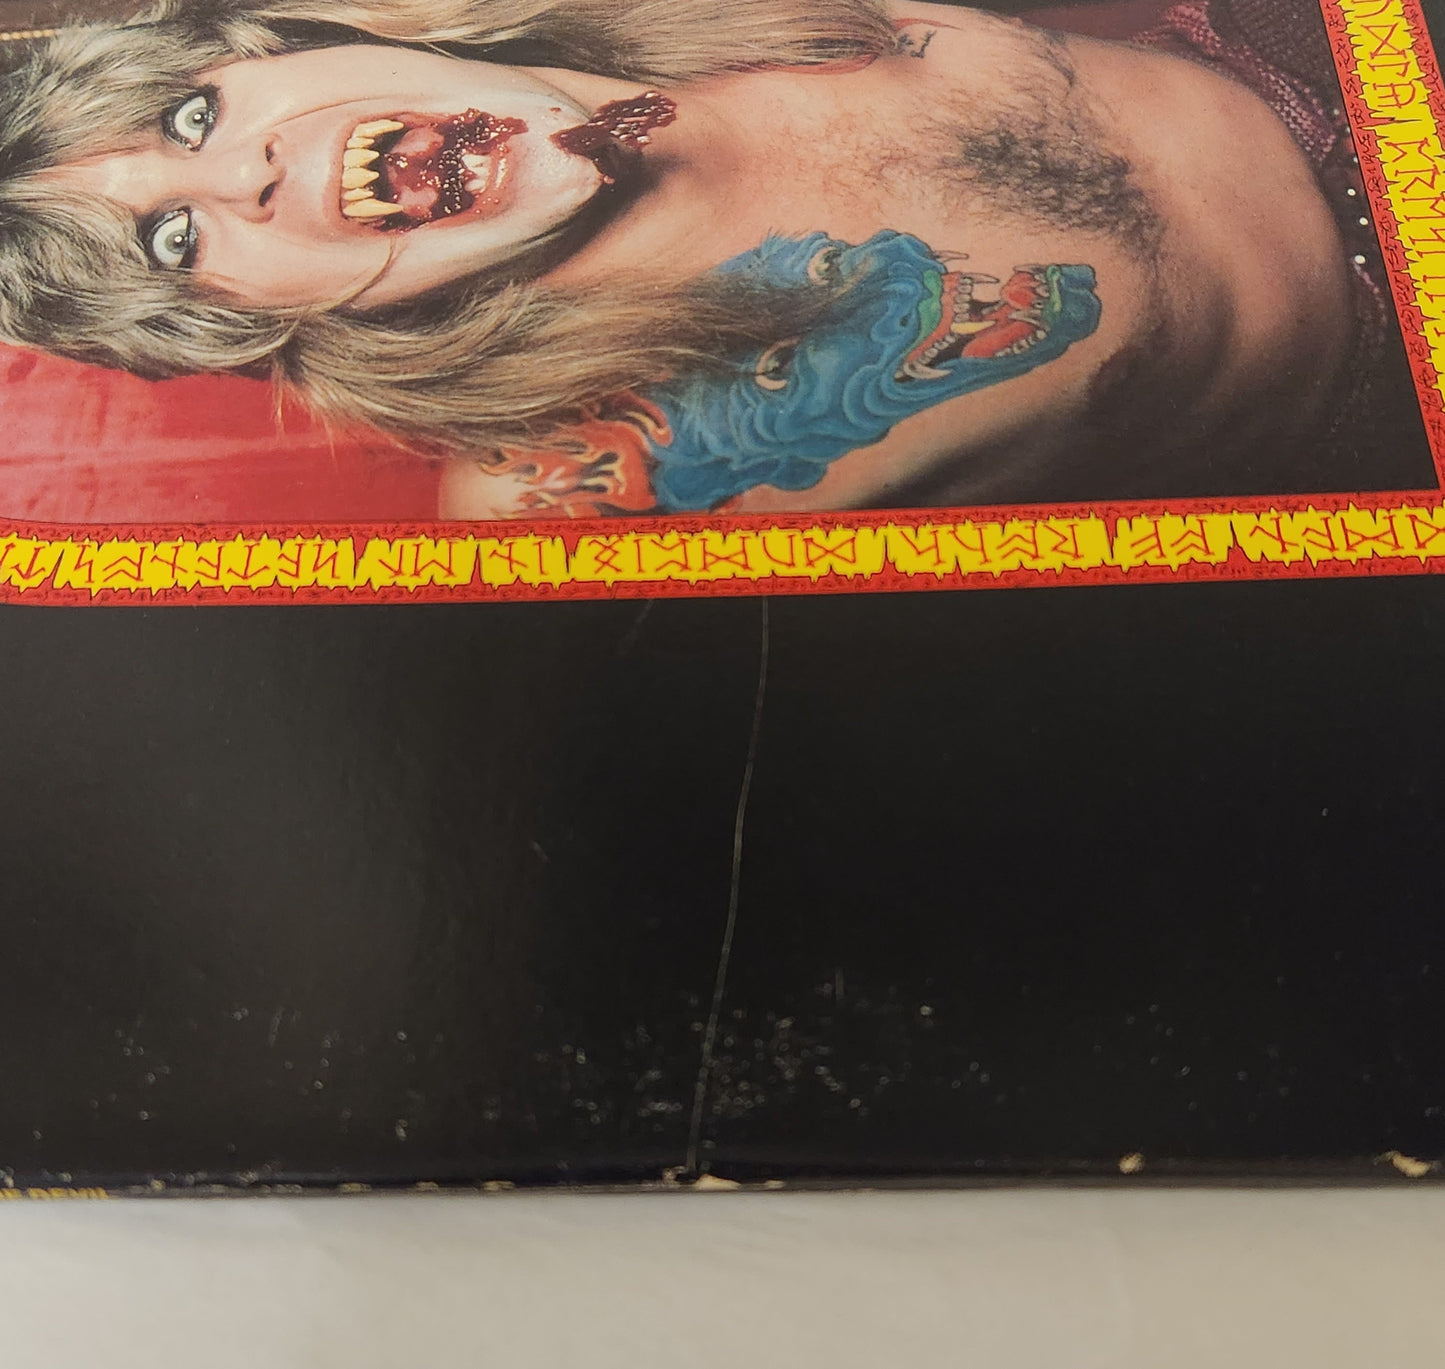 Ozzy Osbourne "Speak Of The Devil" 1982 2 LP Hard Rock Heavy Metal Record Album